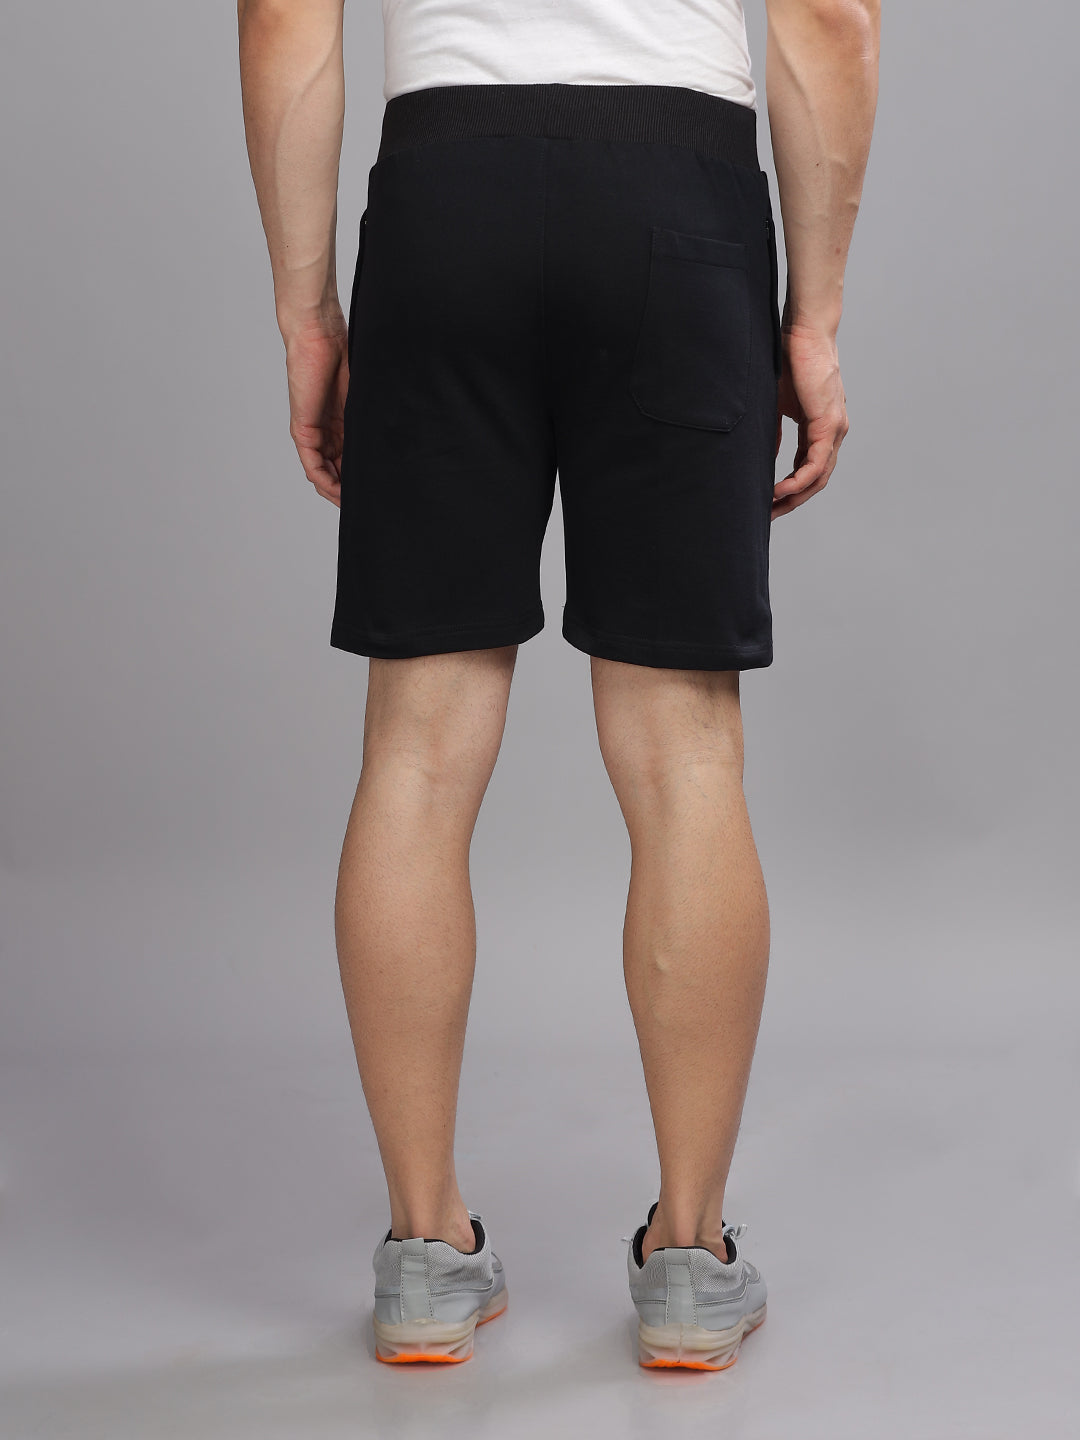 Terry Black Shorts